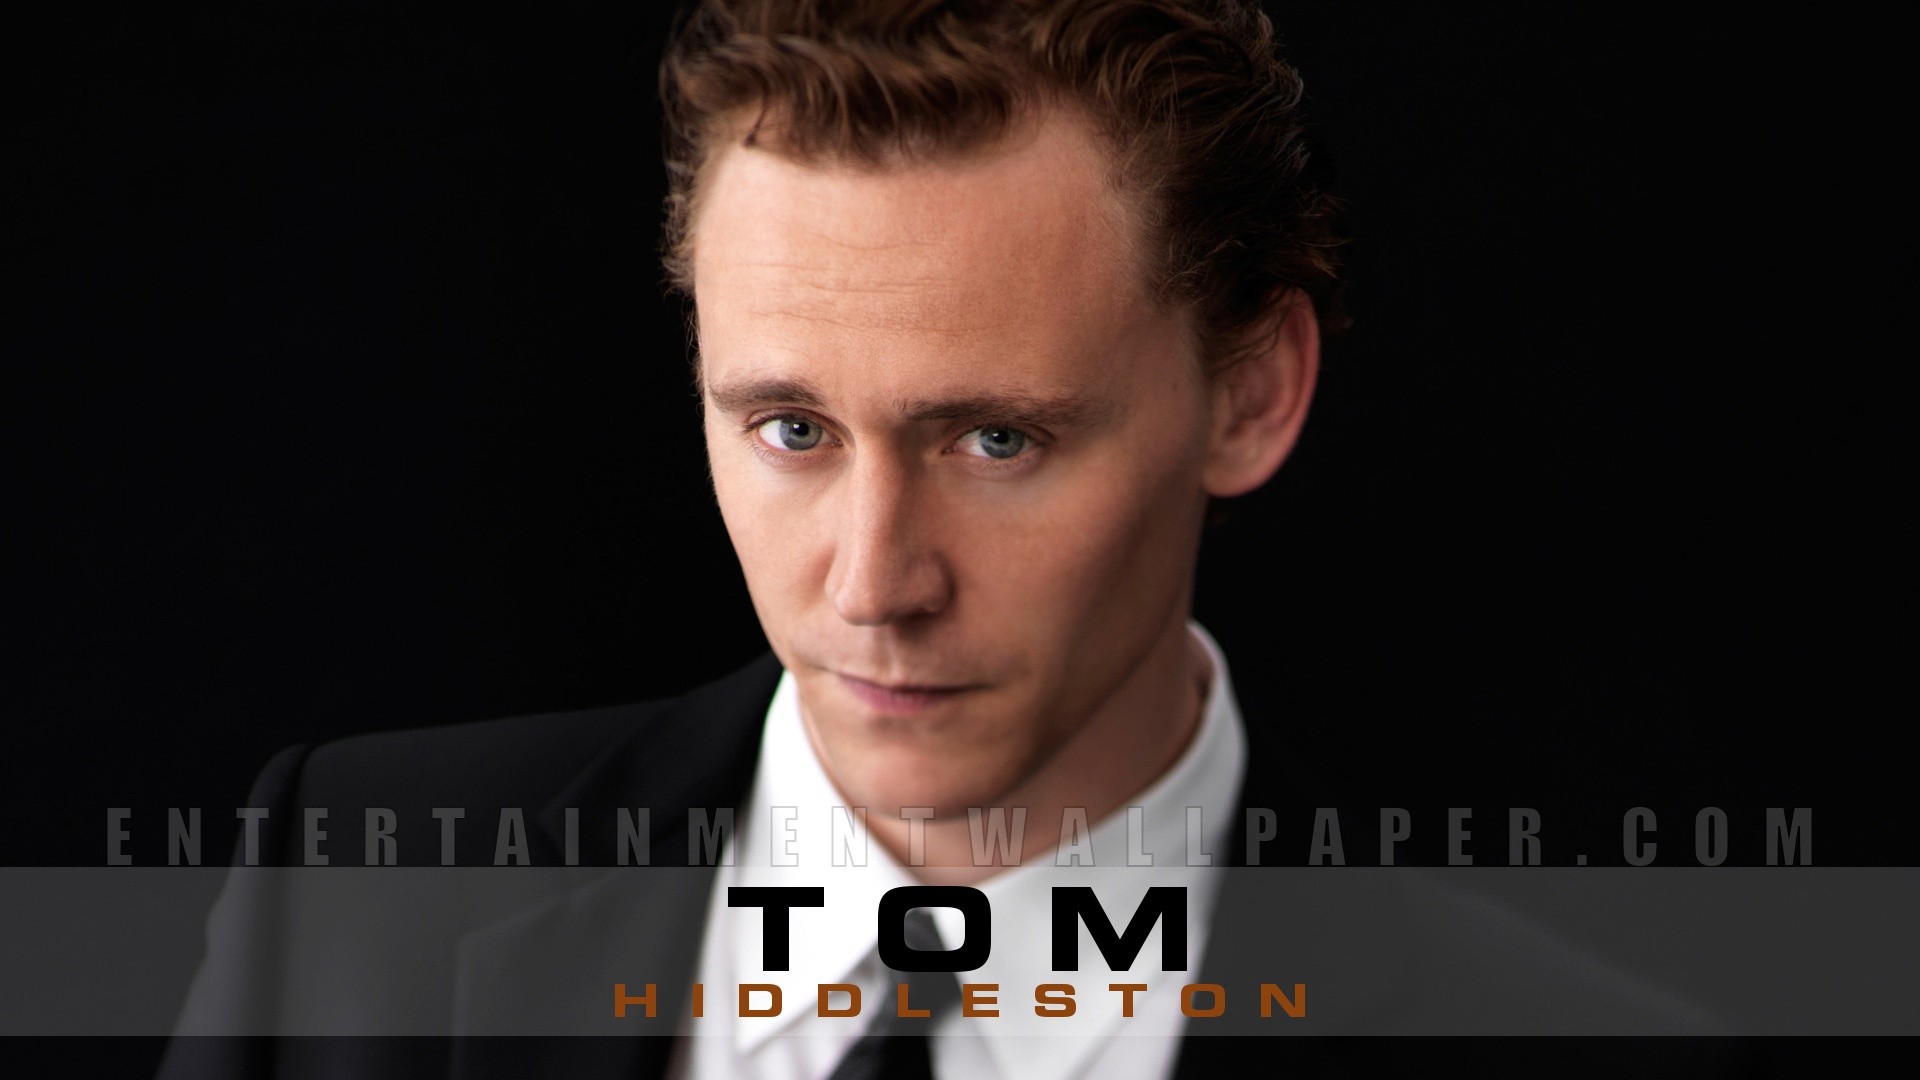 Tom Hiddleston Wallpaper – Original size, download now.